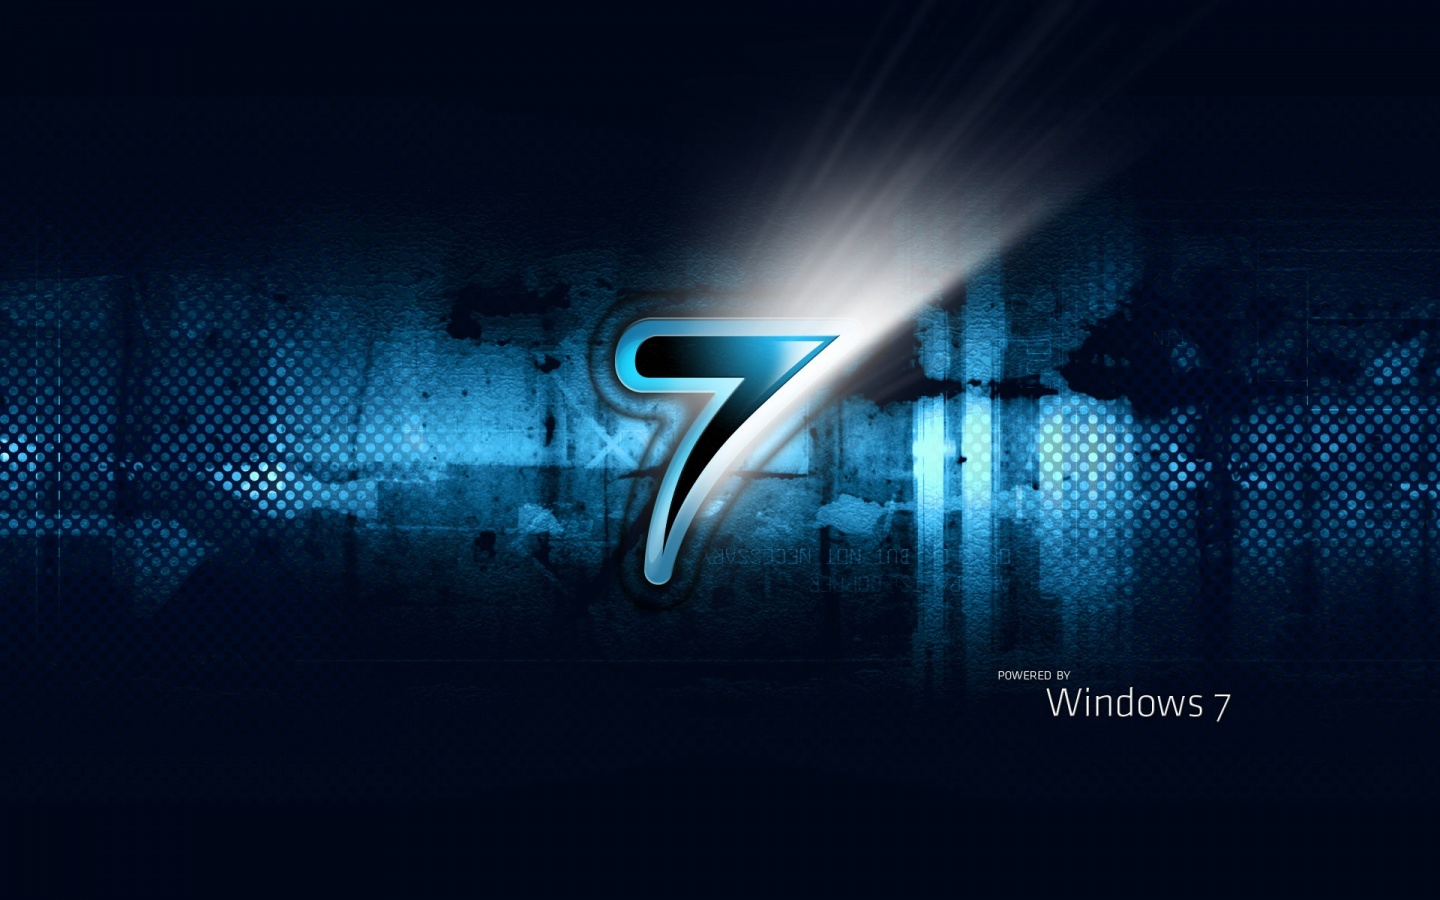 hd wallpapers for windows 7 live wallpaper for windows 7 Desktop 1440x900